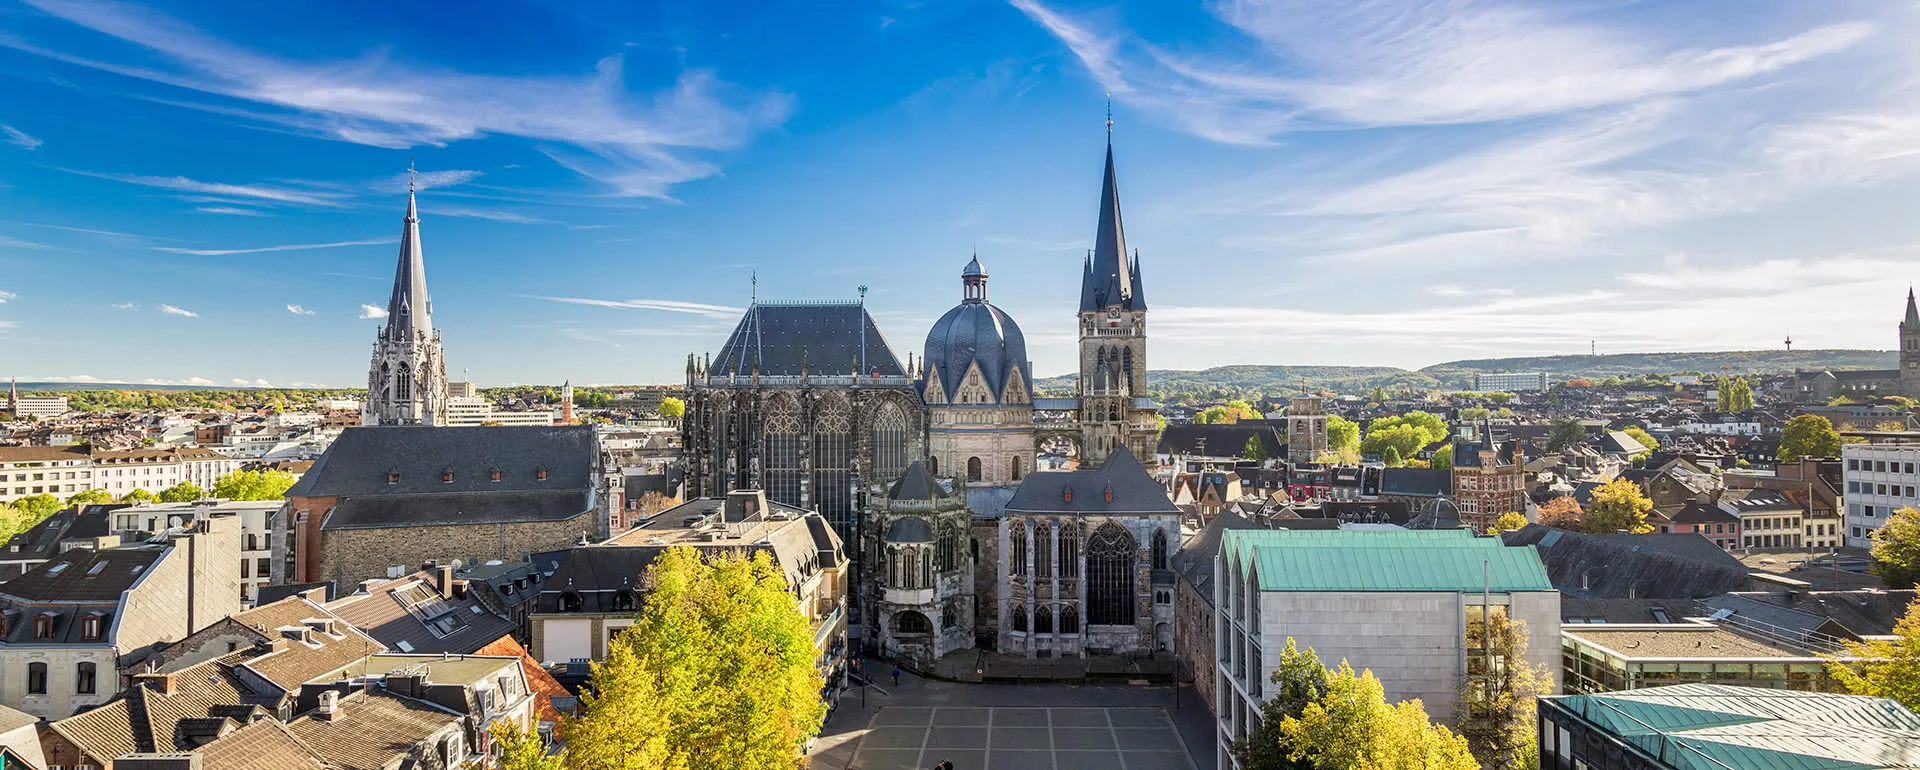 Aachen panorama image